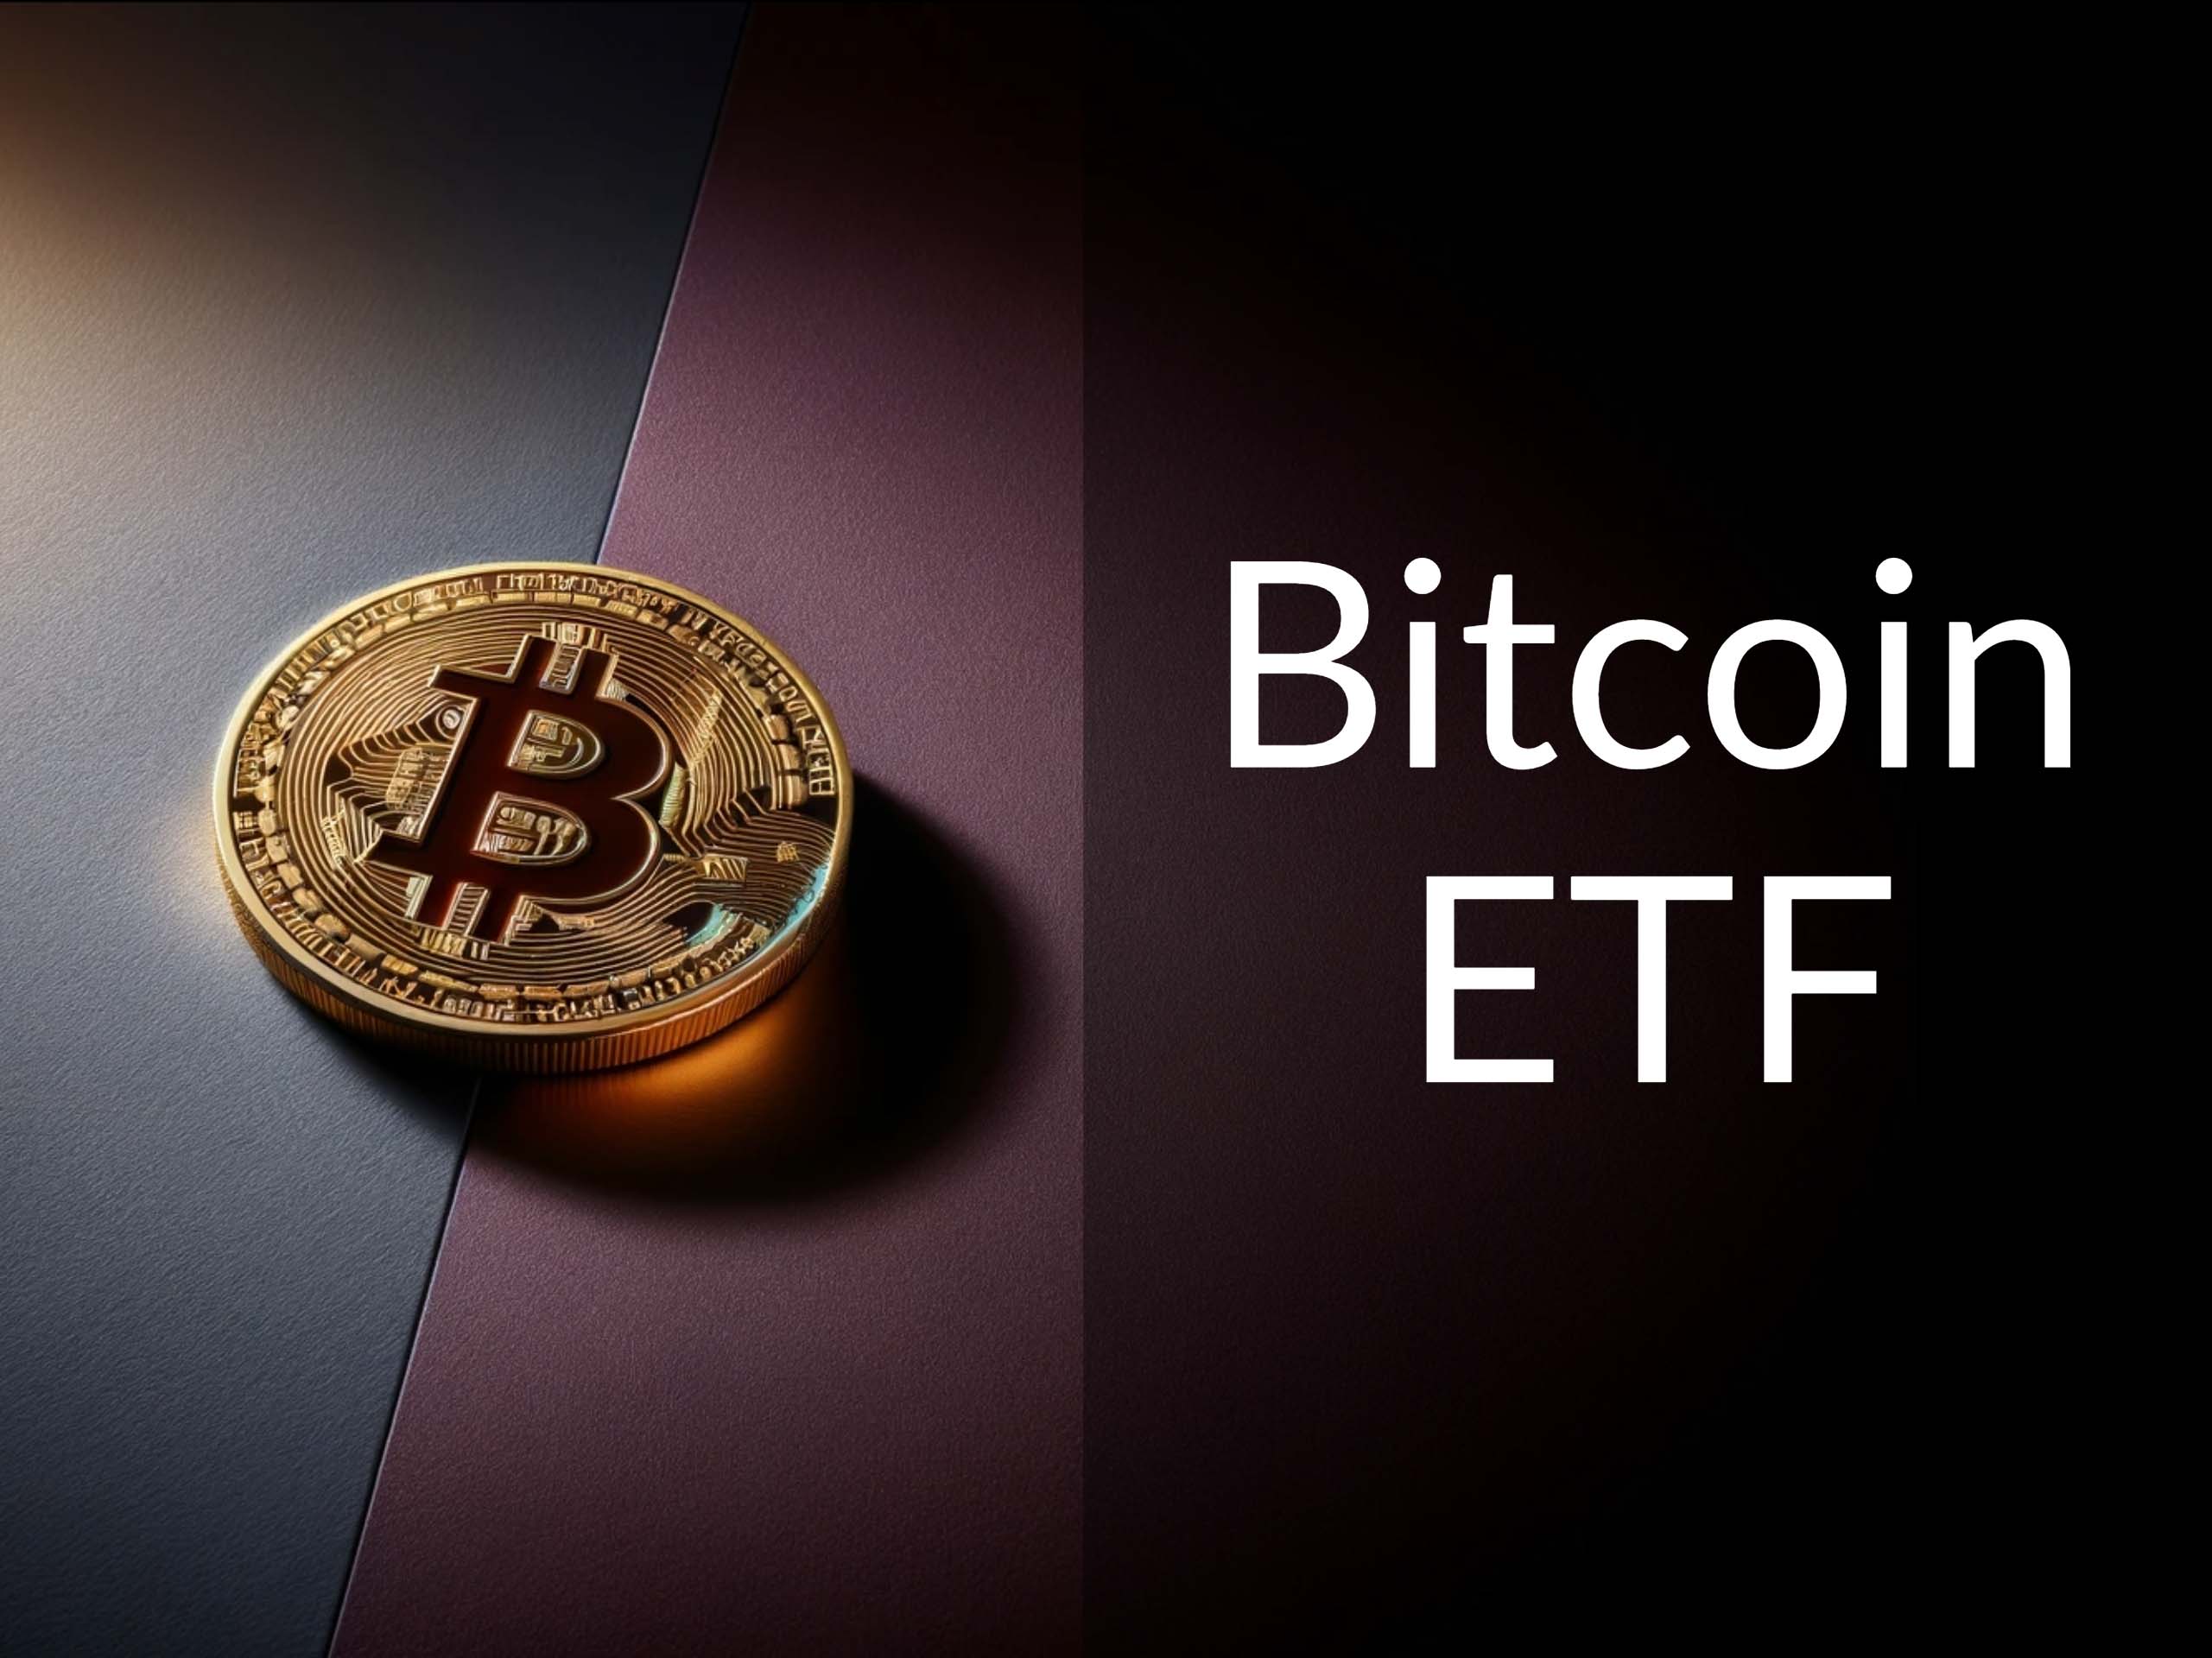 462: Now Should You Buy a Bitcoin ETF?